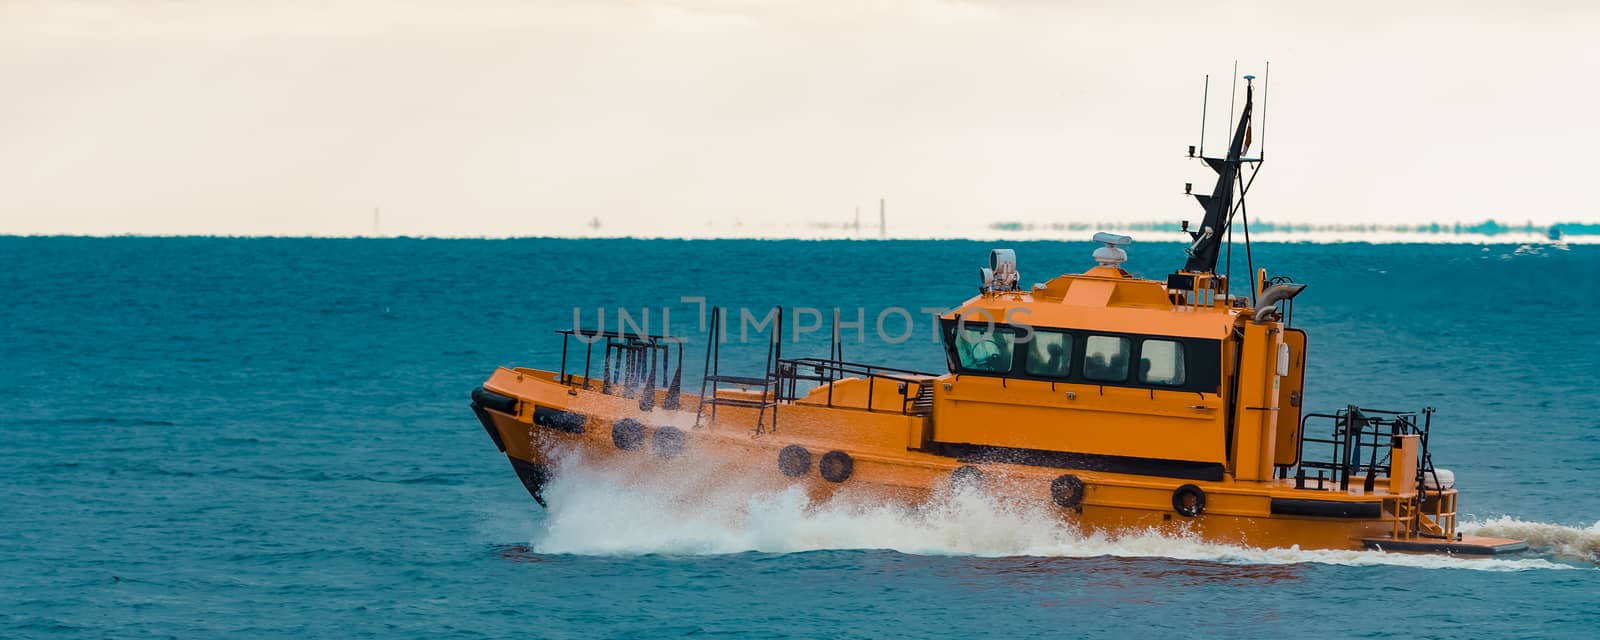 Orange pilot ship by sengnsp